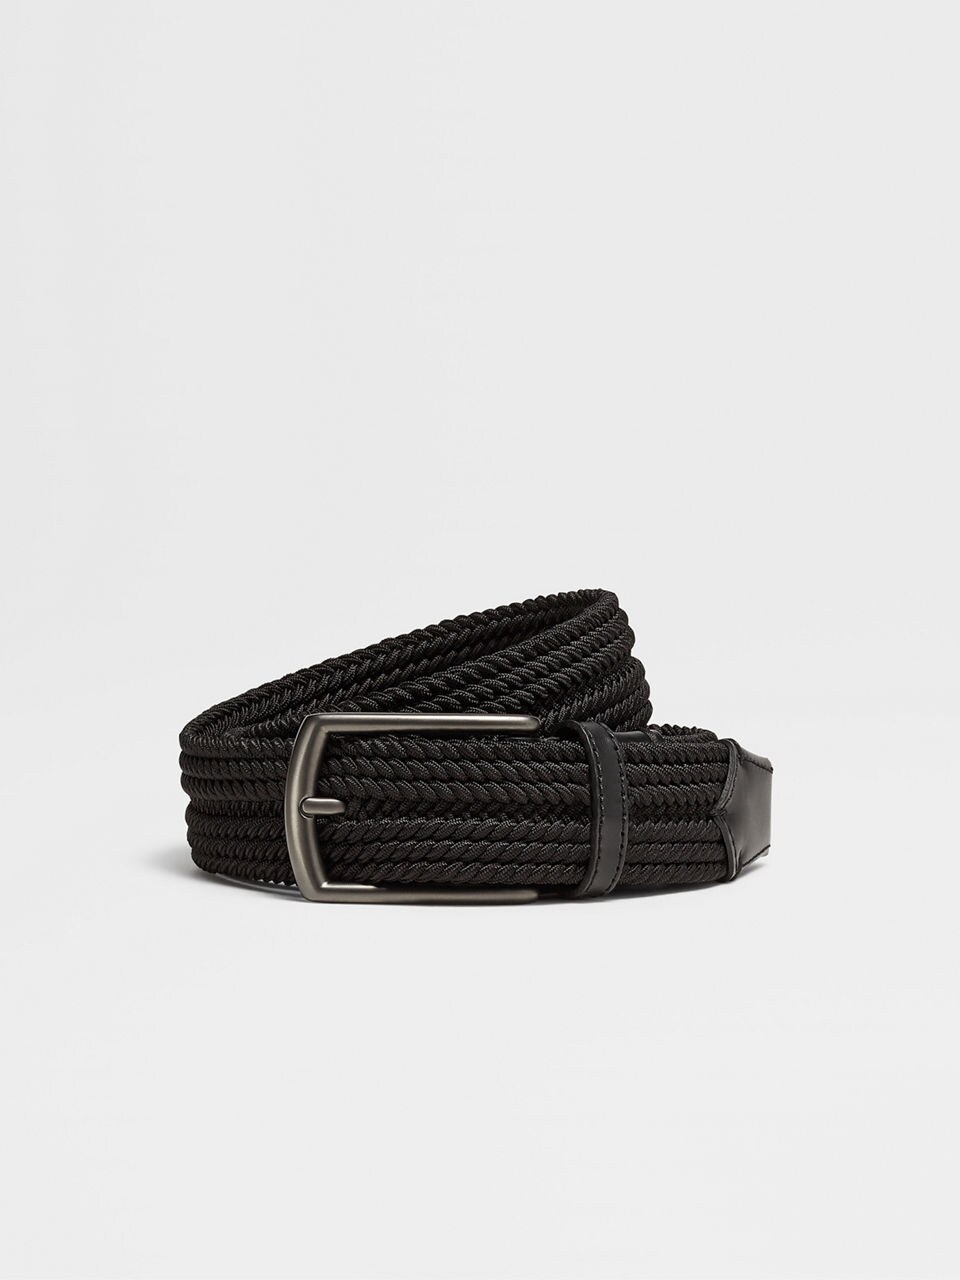 Zegna leather buckle-fastening belt - Blue